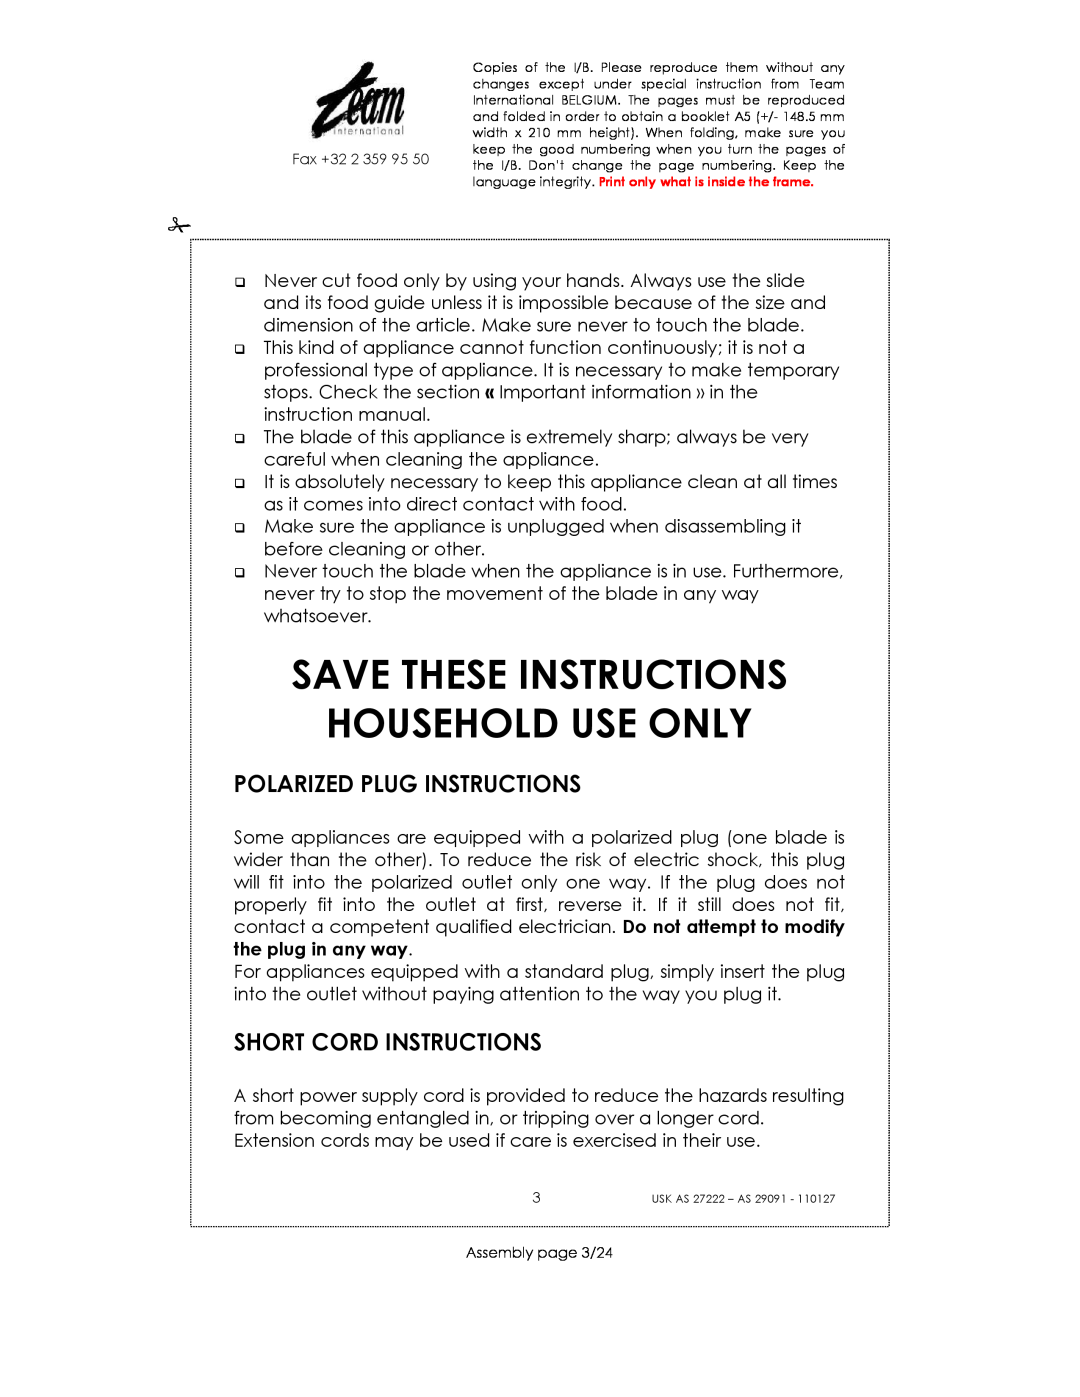 Kalorik USK AS 27222 Save These Instructions Household Use Only, Polarized Plug Instructions, Short Cord Instructions 